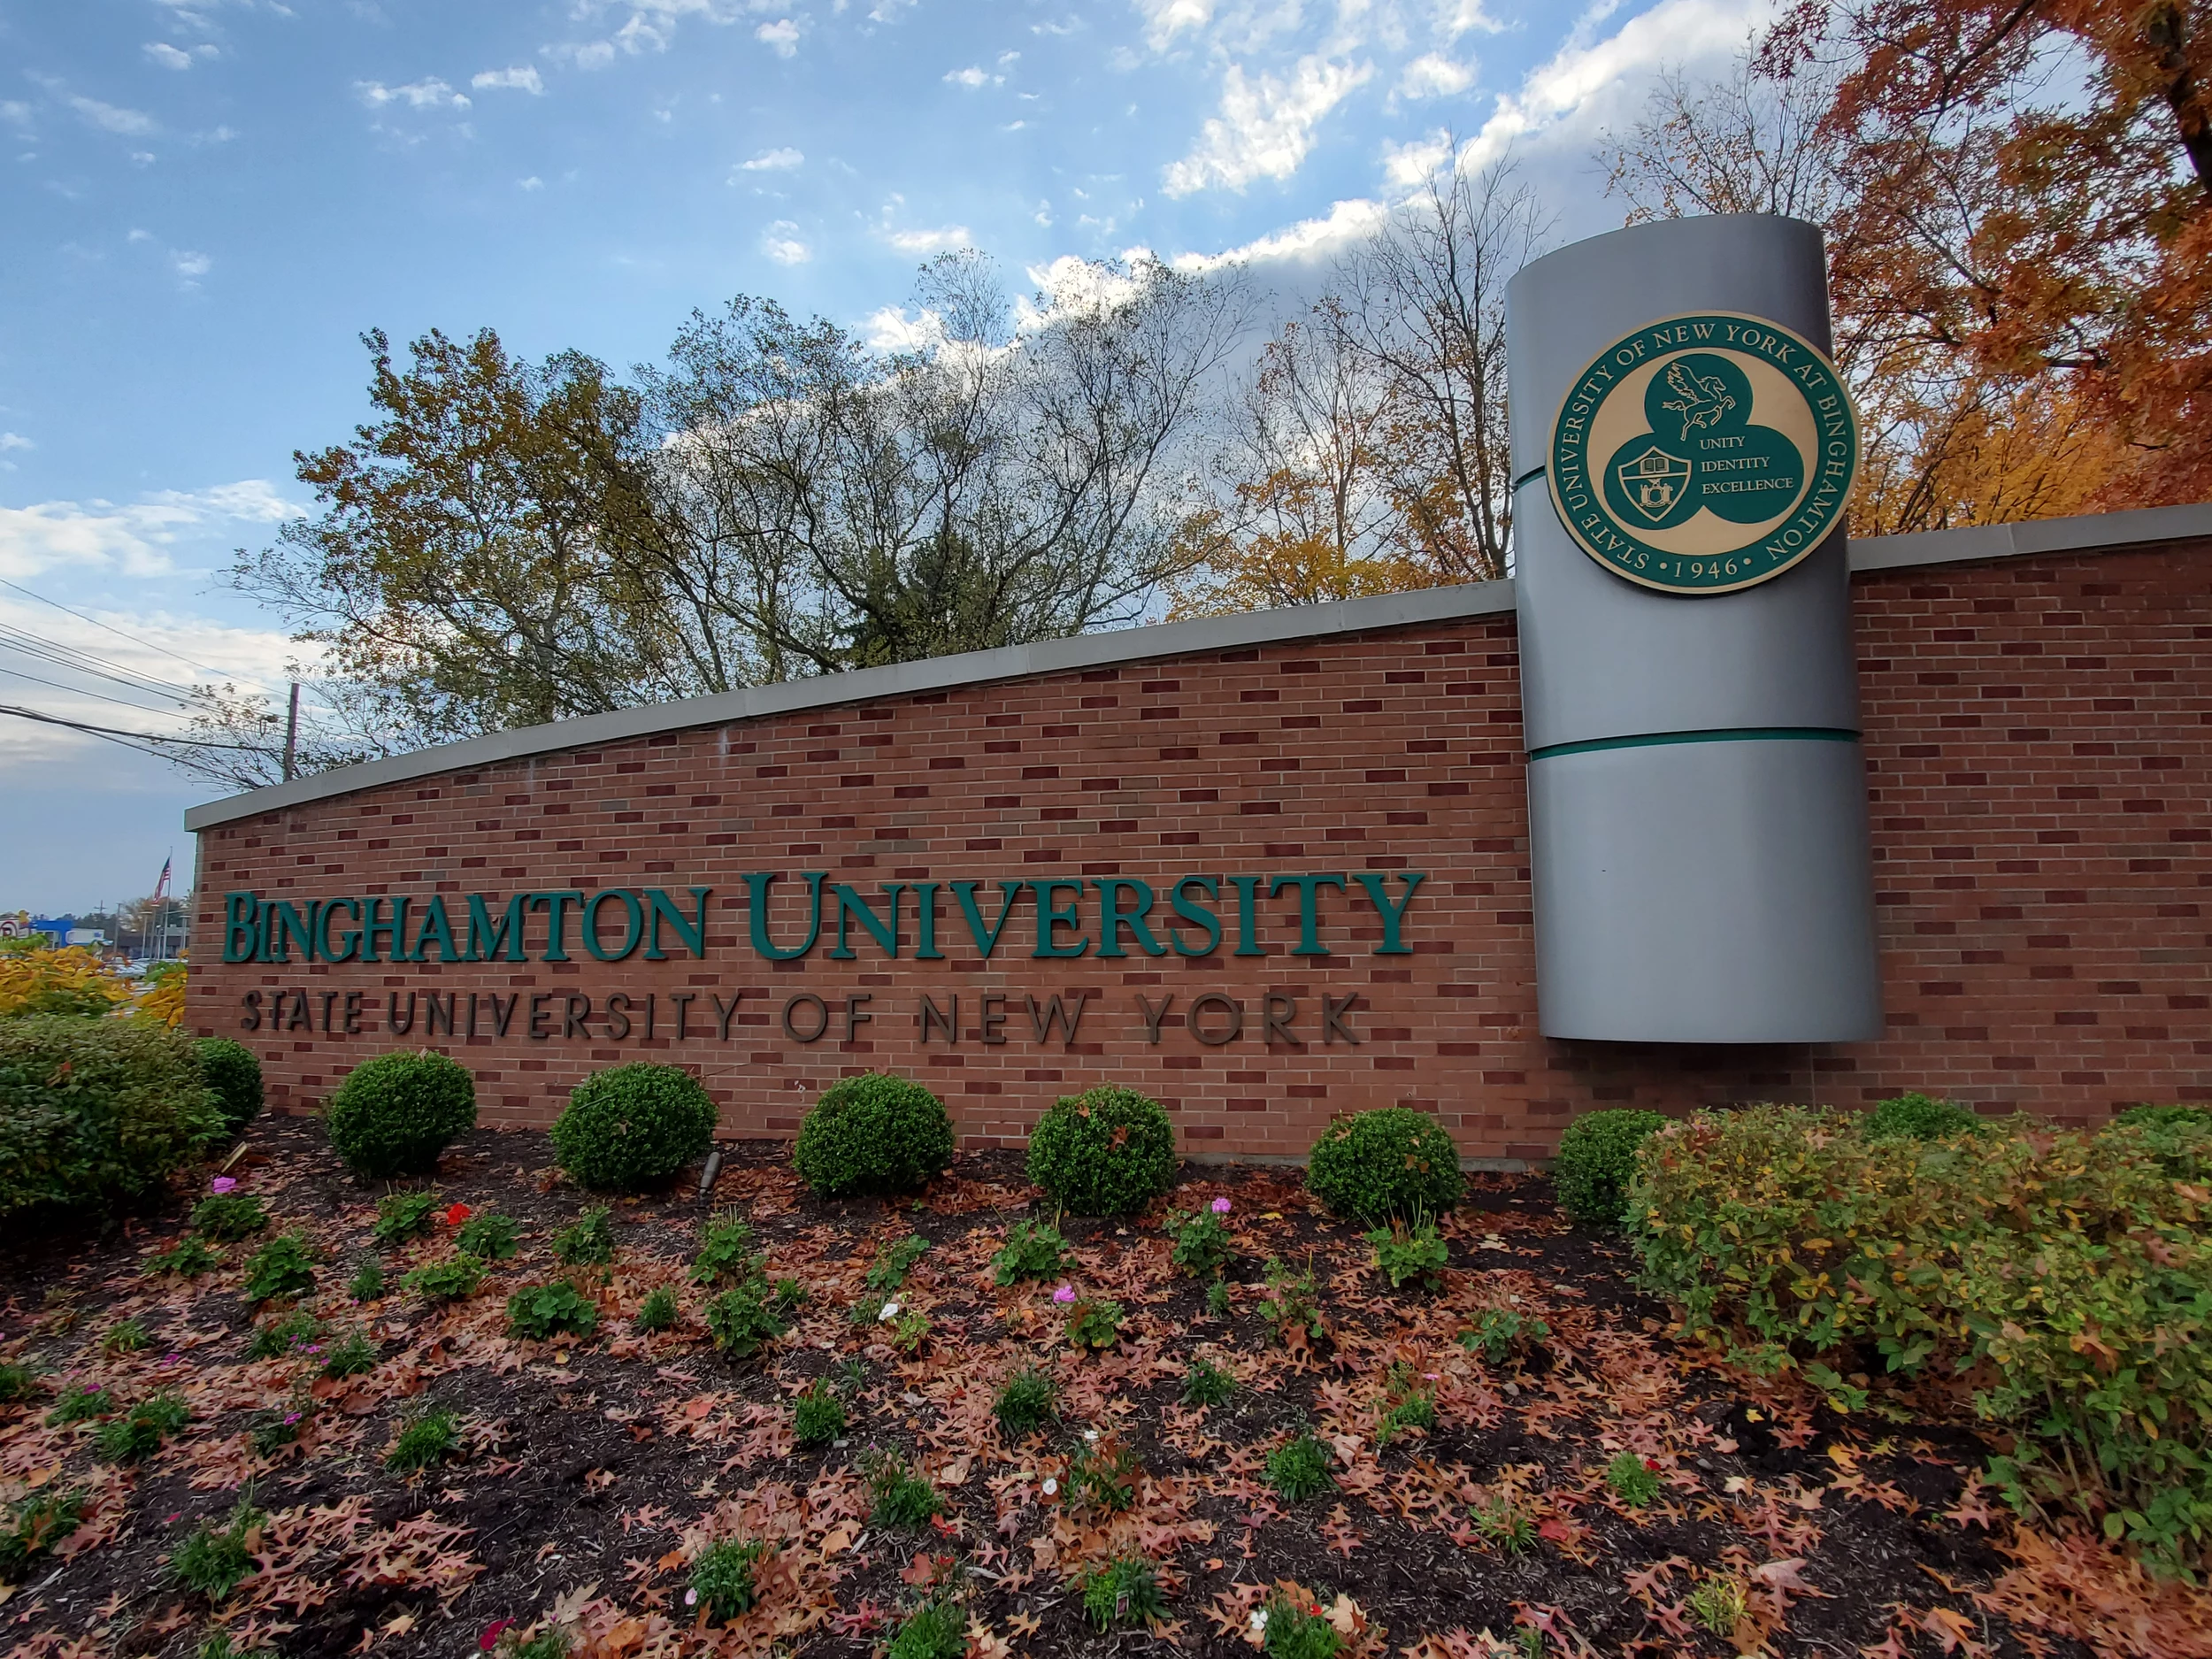 New Binghamton University Calendar 2022 2023 Ngtsdp Timeshare 2022